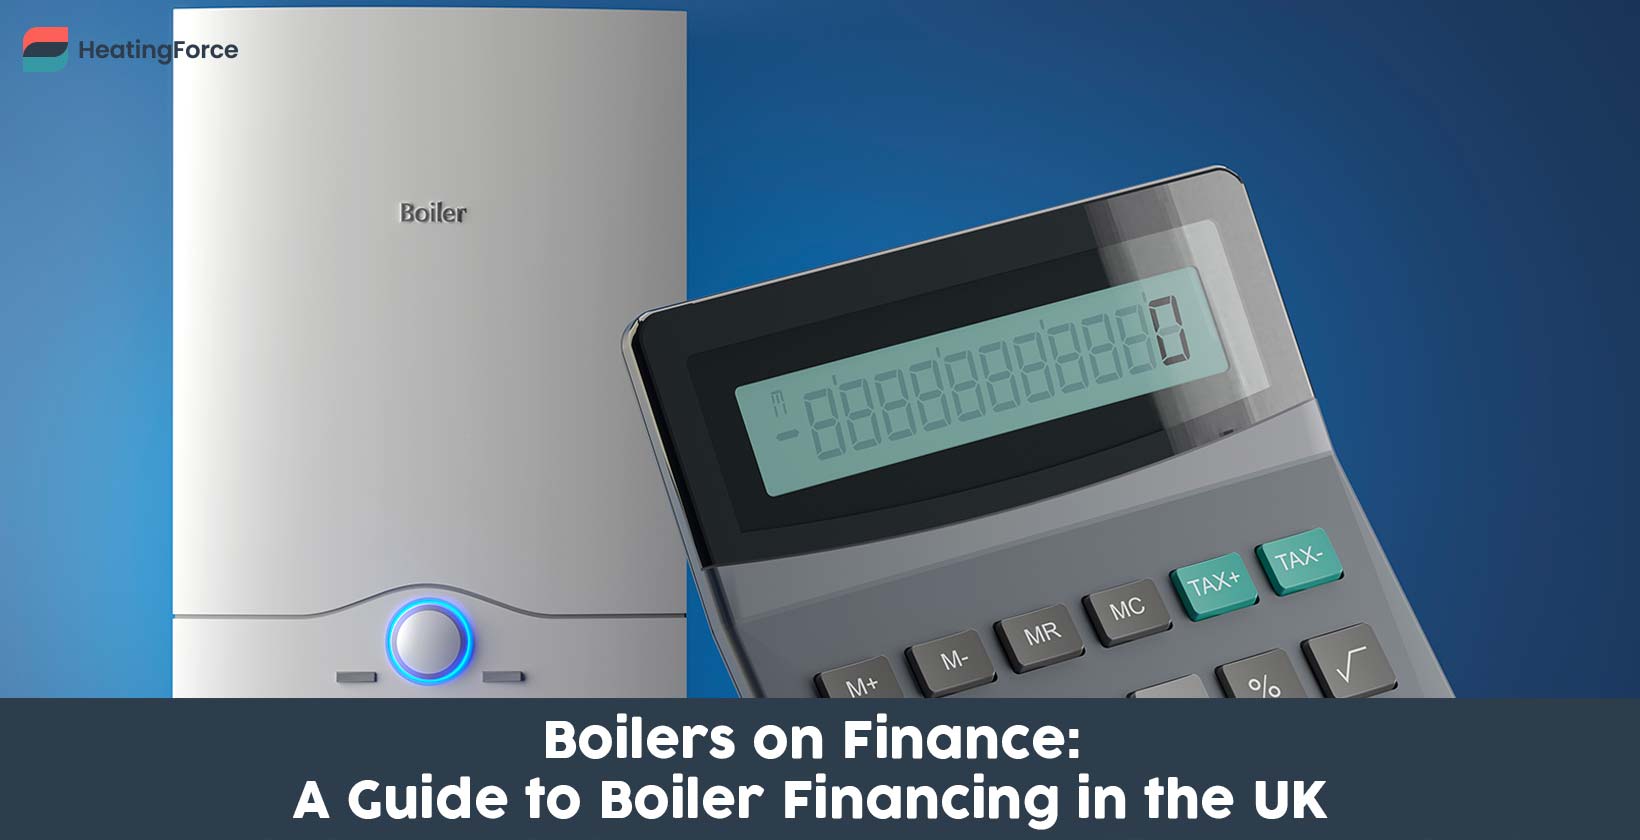 Boiler financing